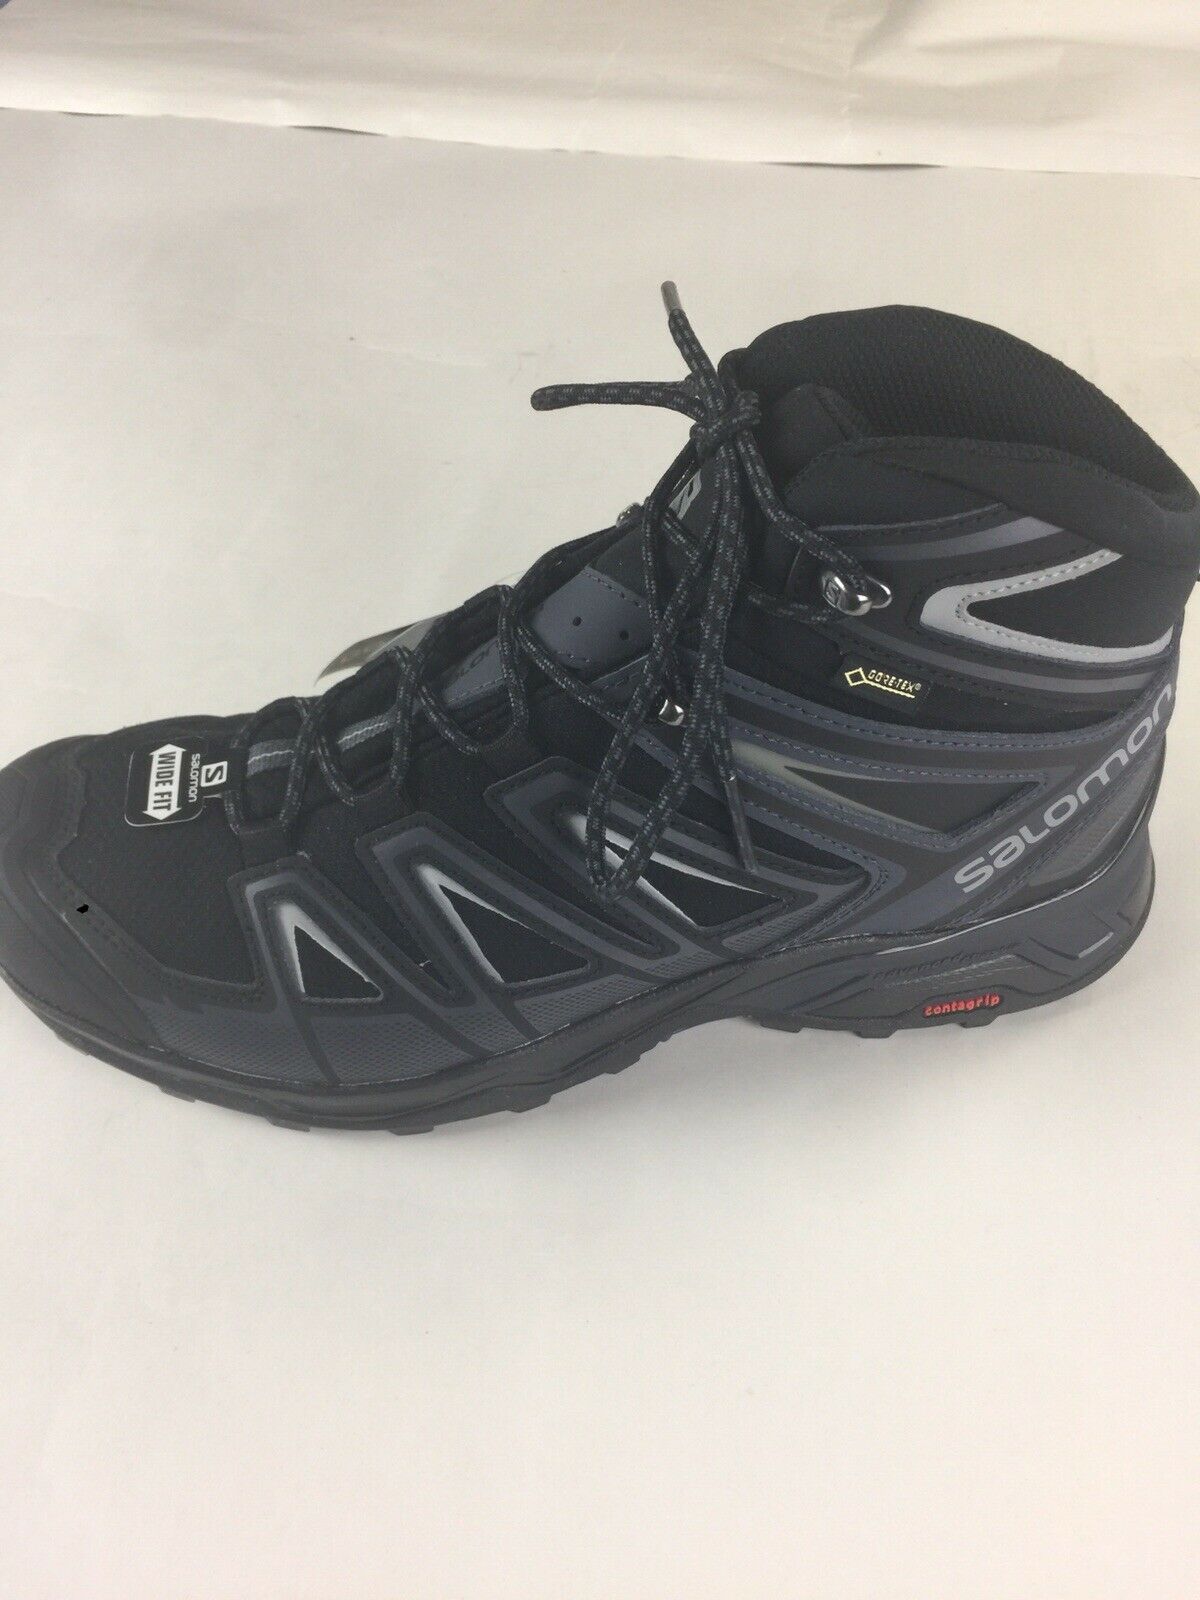 Salomon Men's X Ultra 3 Mid GTX Hiking Boots Black Size 9.5 EE New GorTex